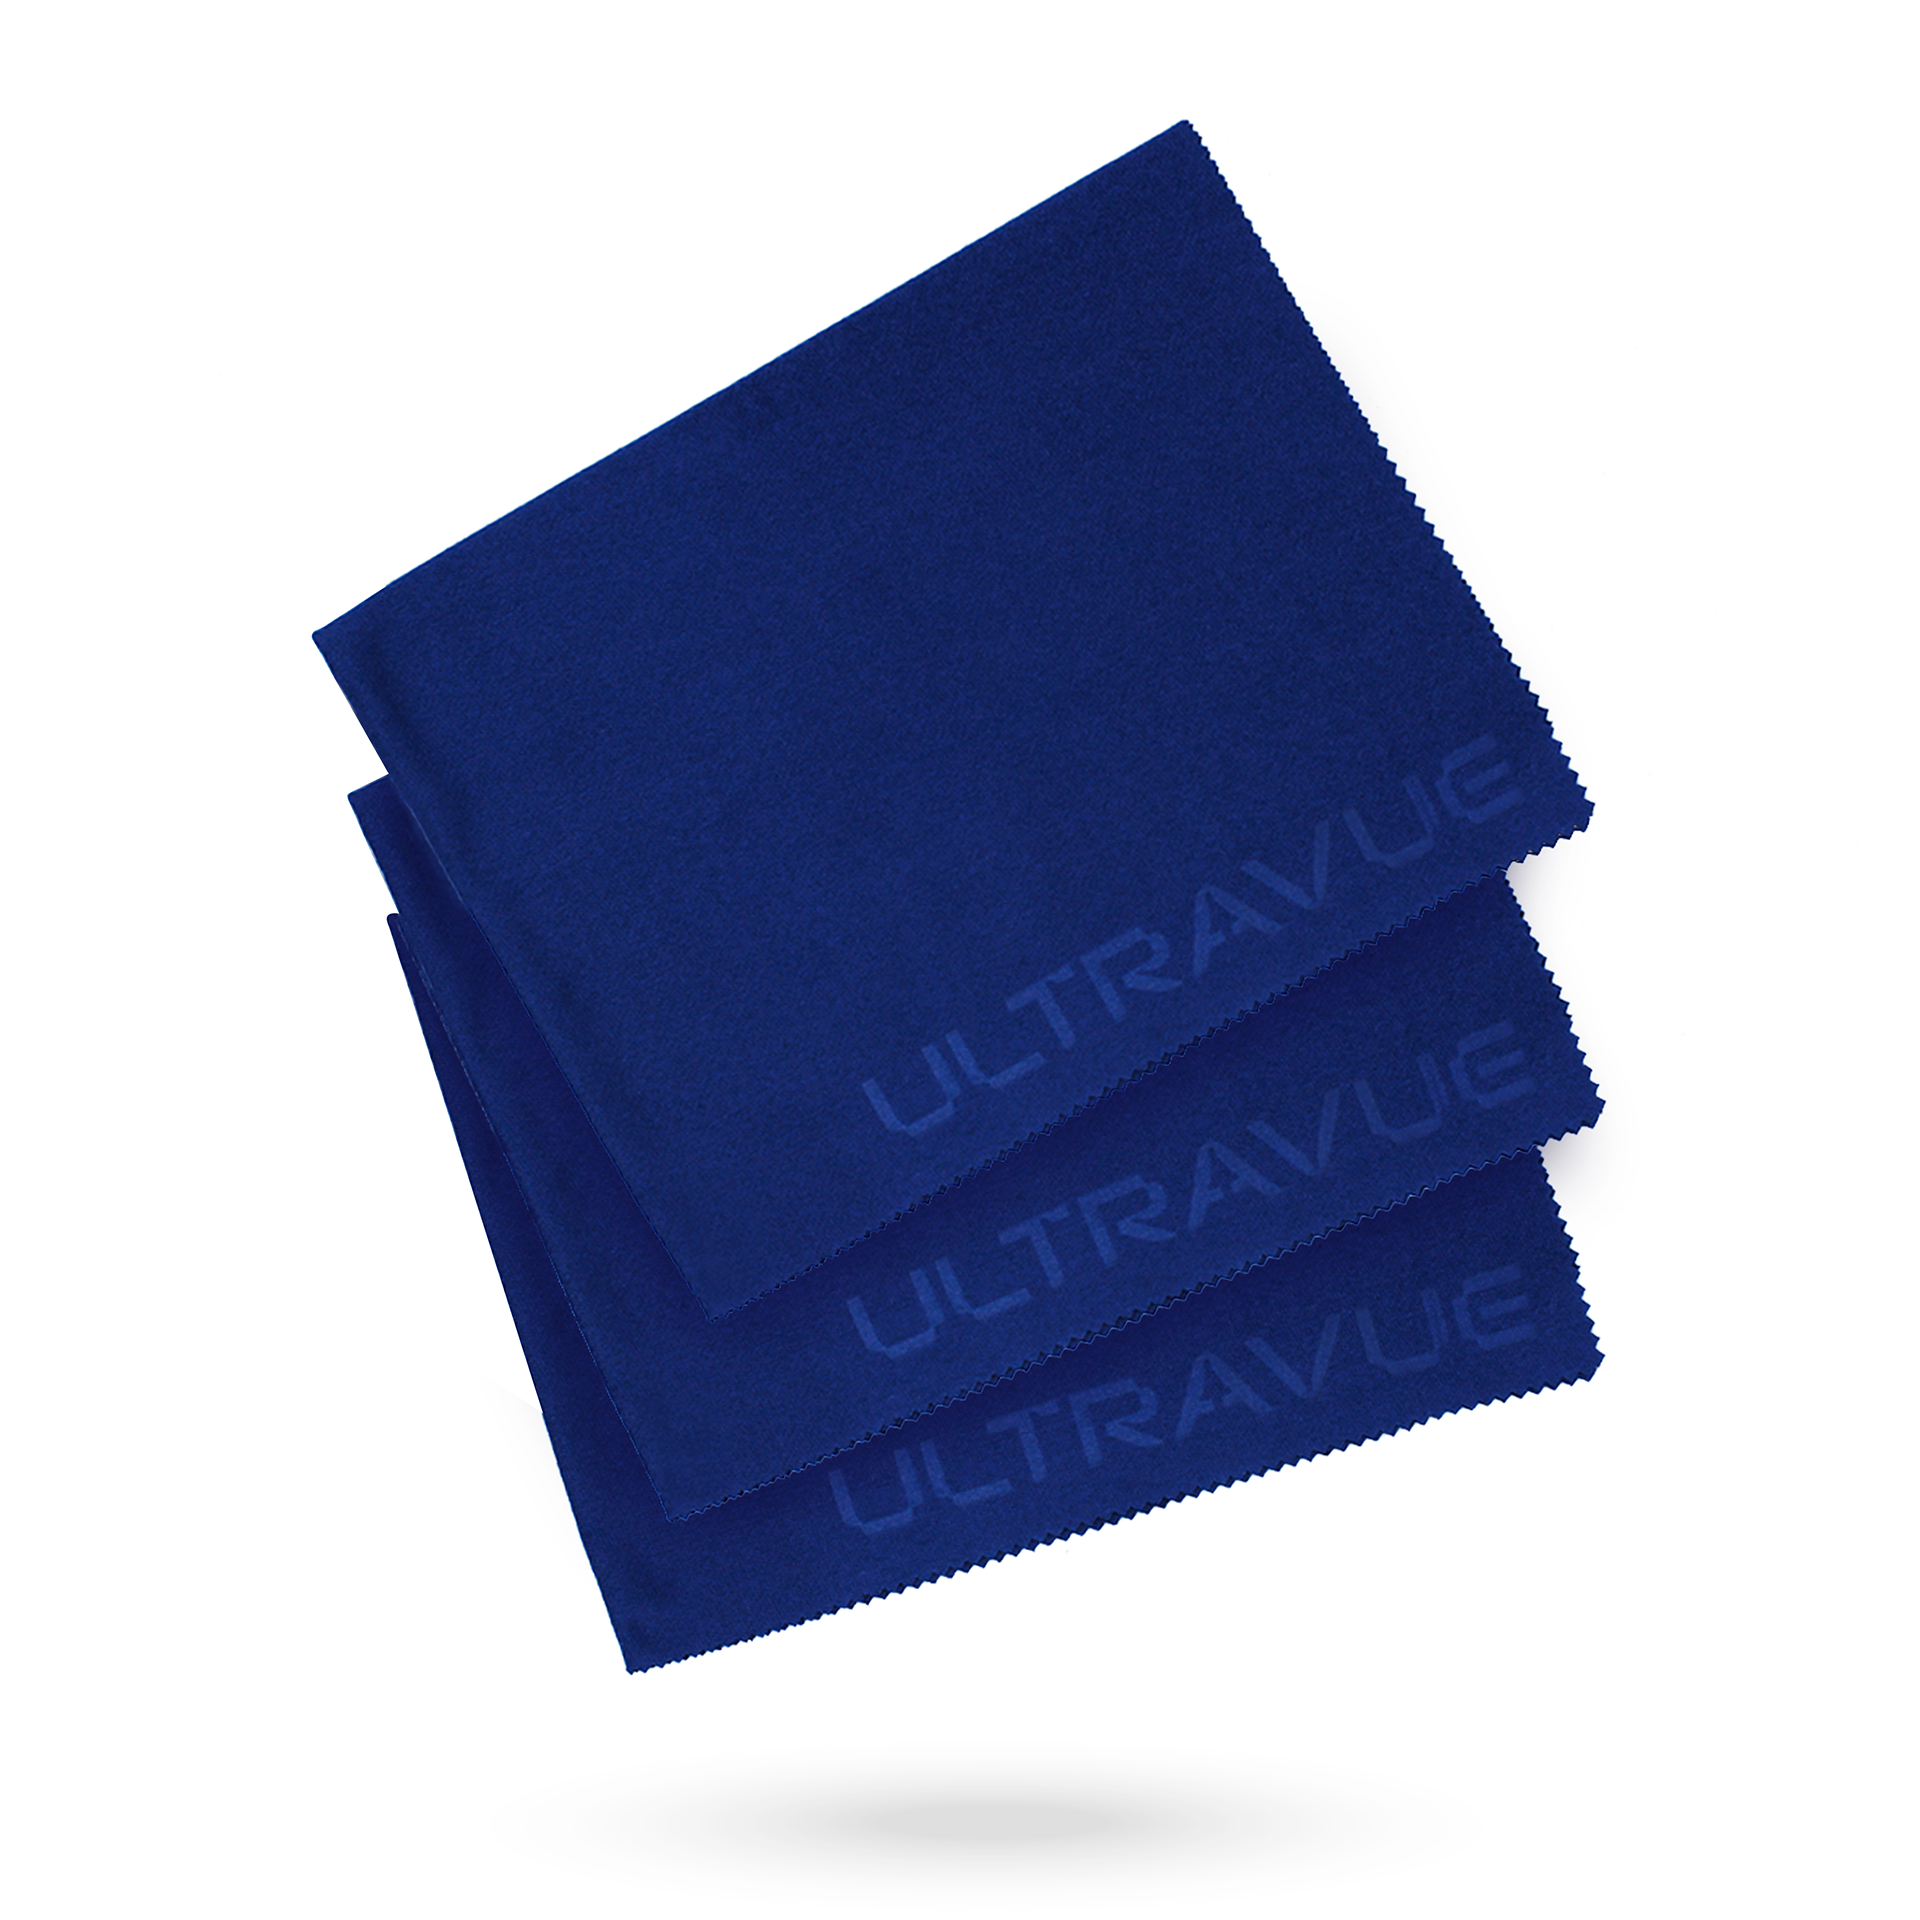 Ultravue Microfiber Cloths - 3 Pack - Blue